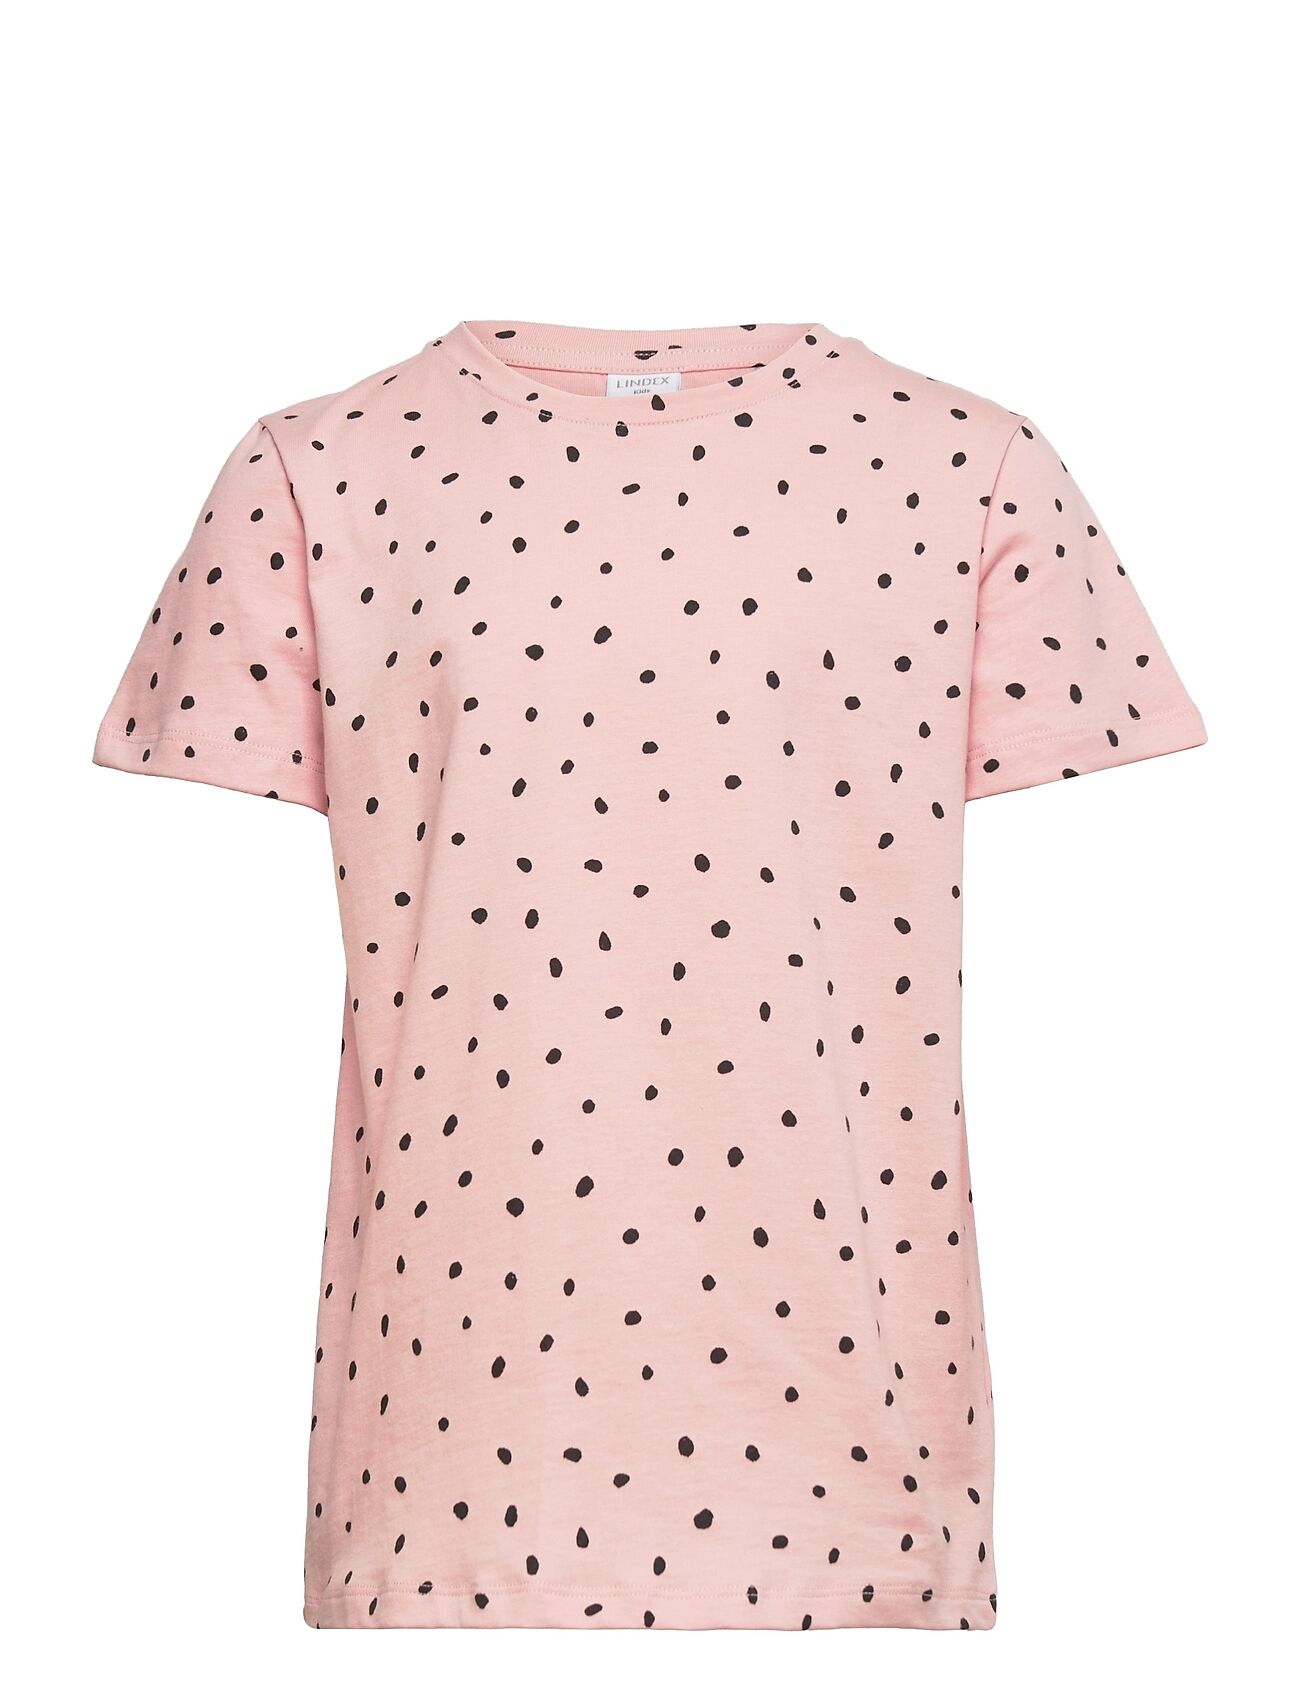 Lindex Top S S Basic Ao Print T-shirts Short-sleeved Multi/mønstret Lindex